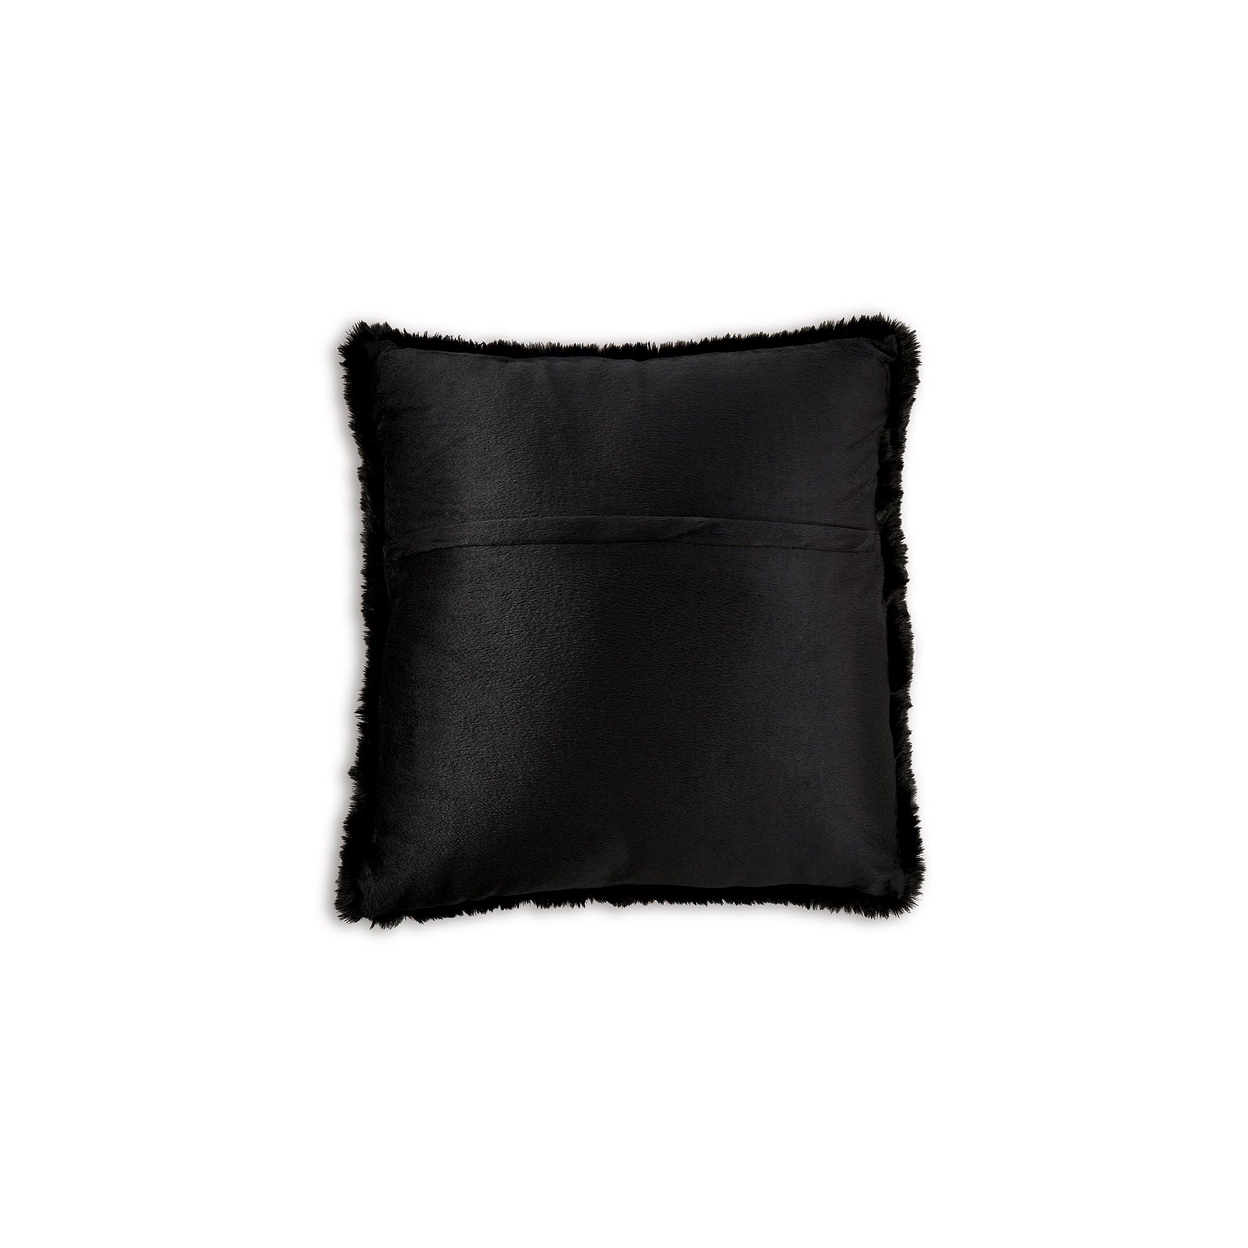 20 Inch Fluffy Accent Throw Pillow, Zipper, Soft Plush Black Faux Fur- Saltoro Sherpi